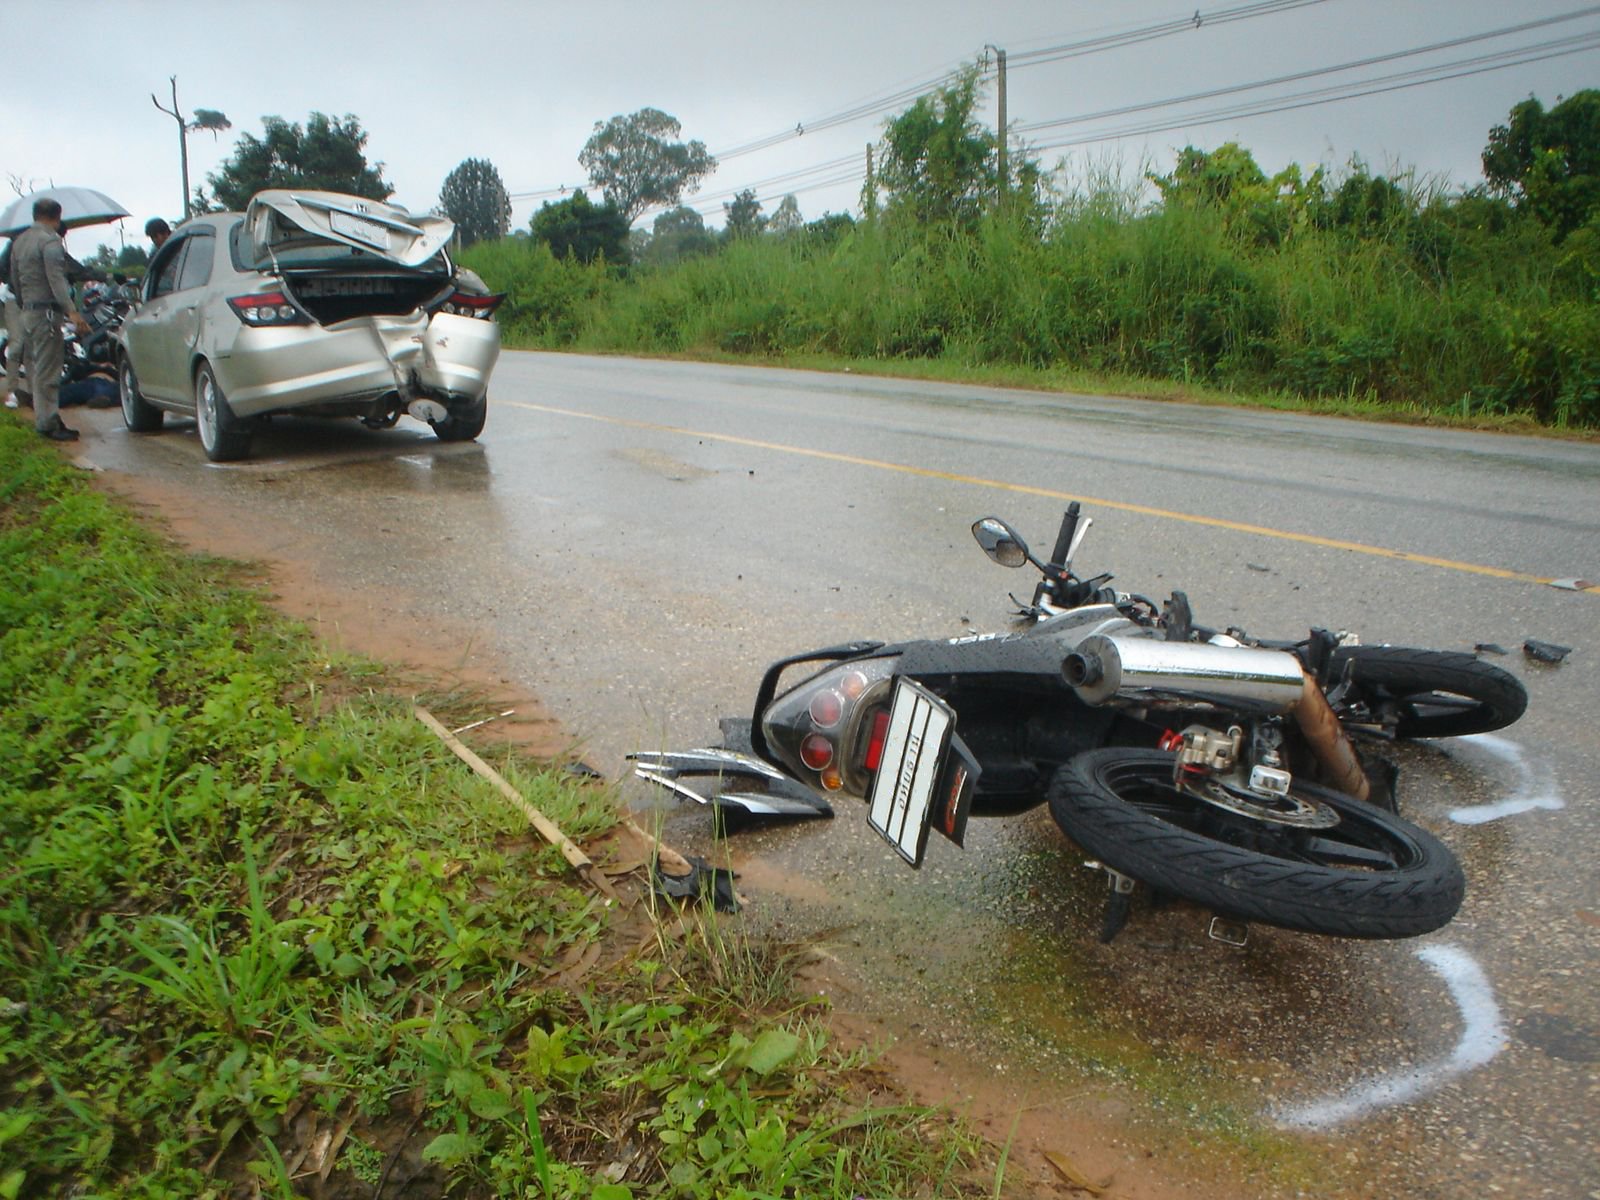 Motorcycle crash involving a car